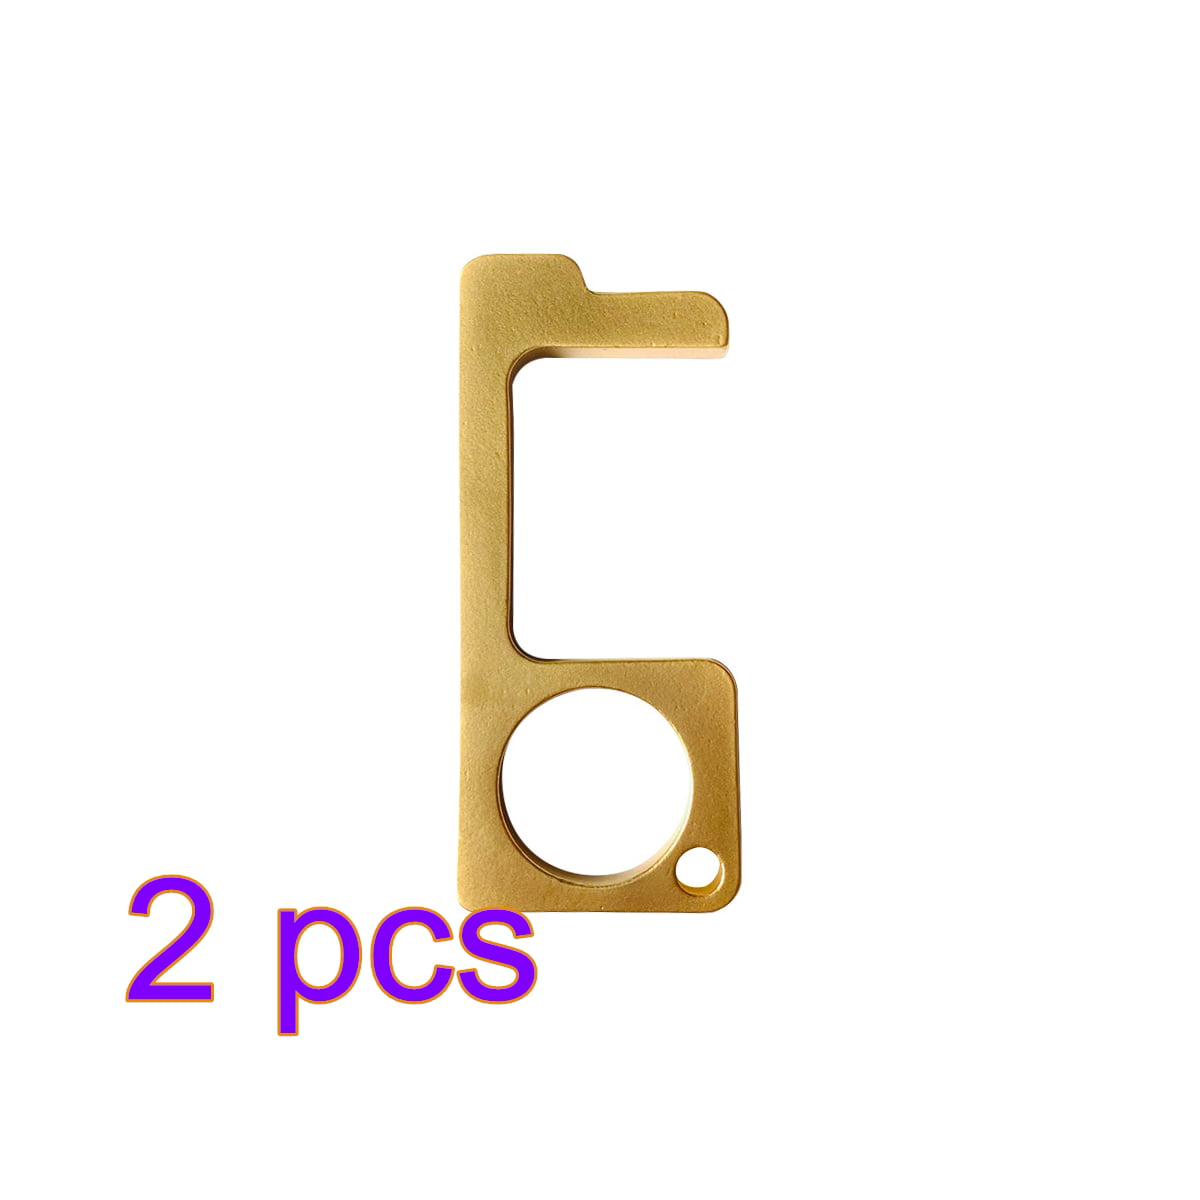 2 PACK Portable Zero touch Door Opener Press Elevator Germs free no contact 